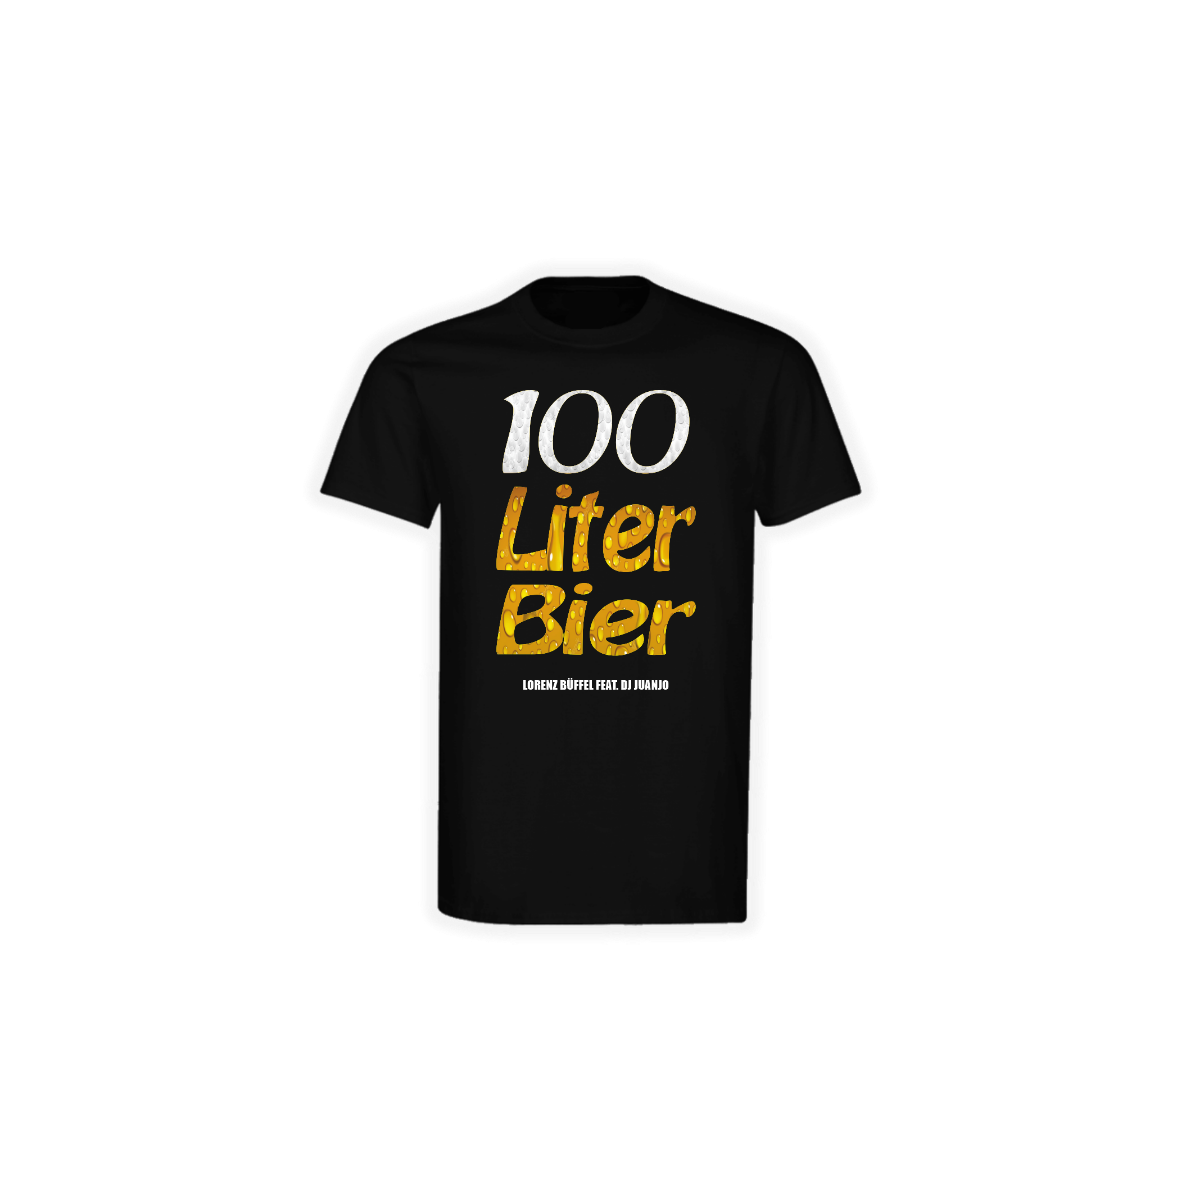 T-Shirt "100 LITER BIER" (Biermotiv)